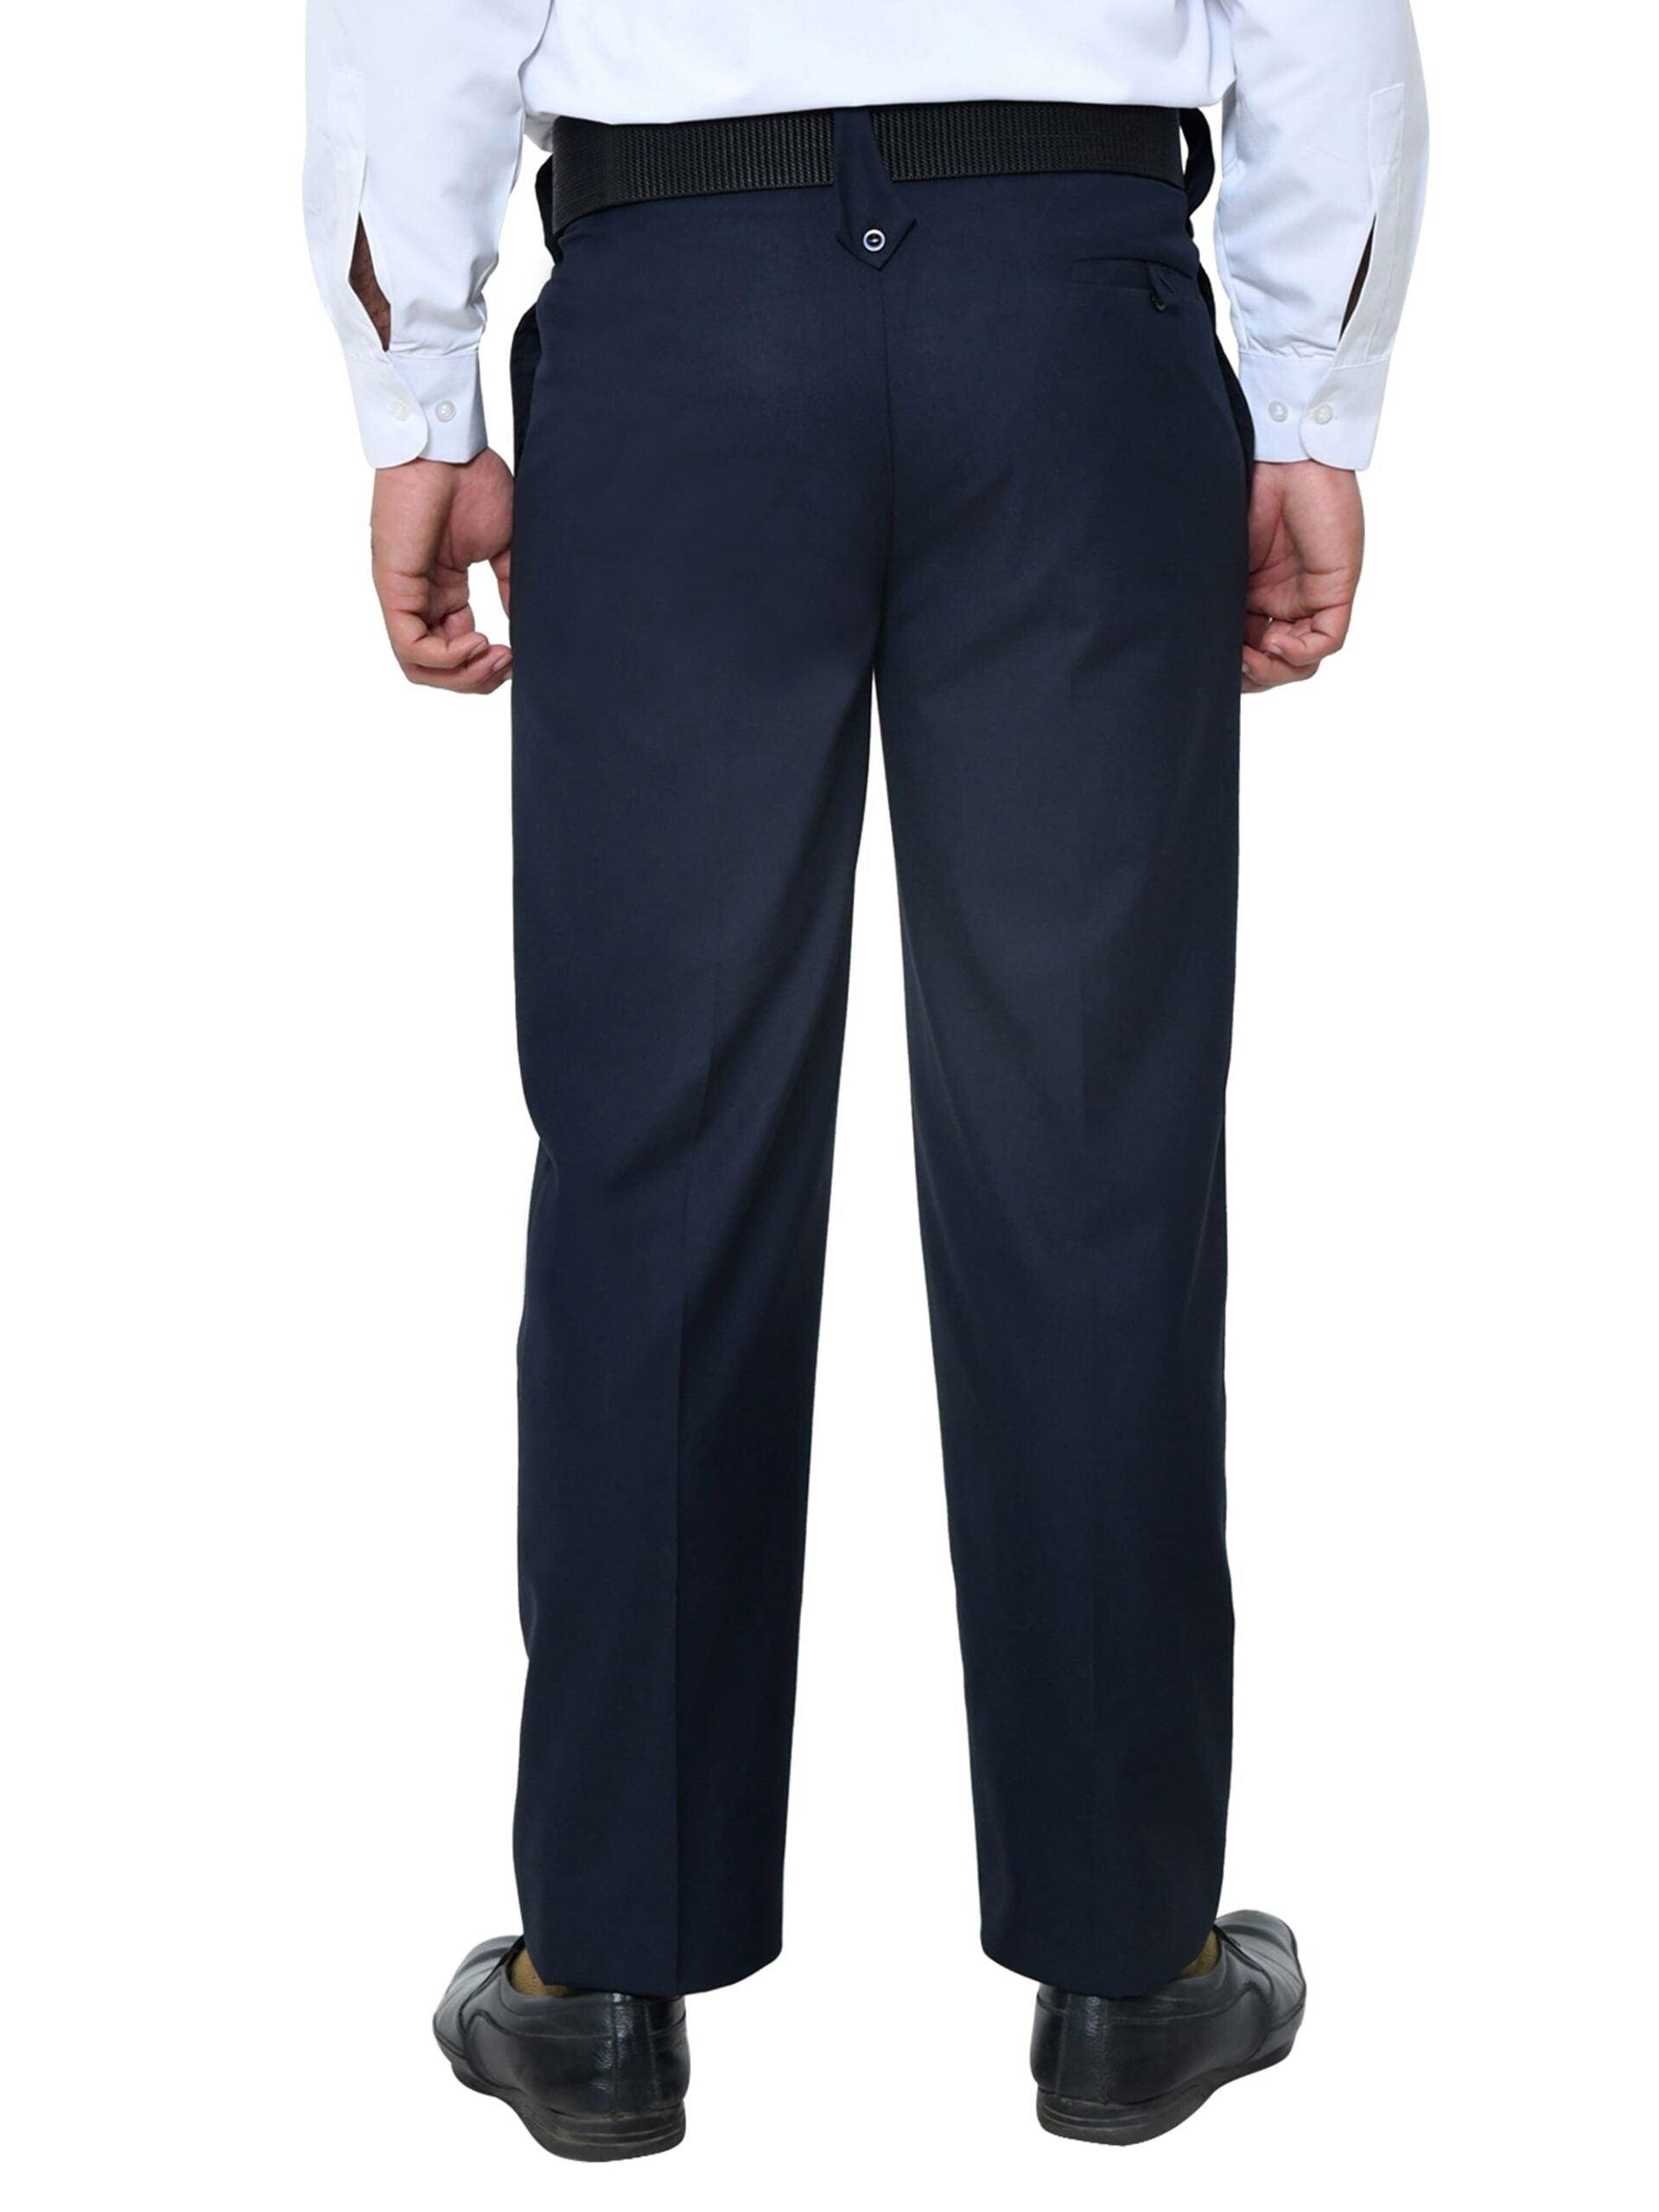 Traffic Police Uniform Pants